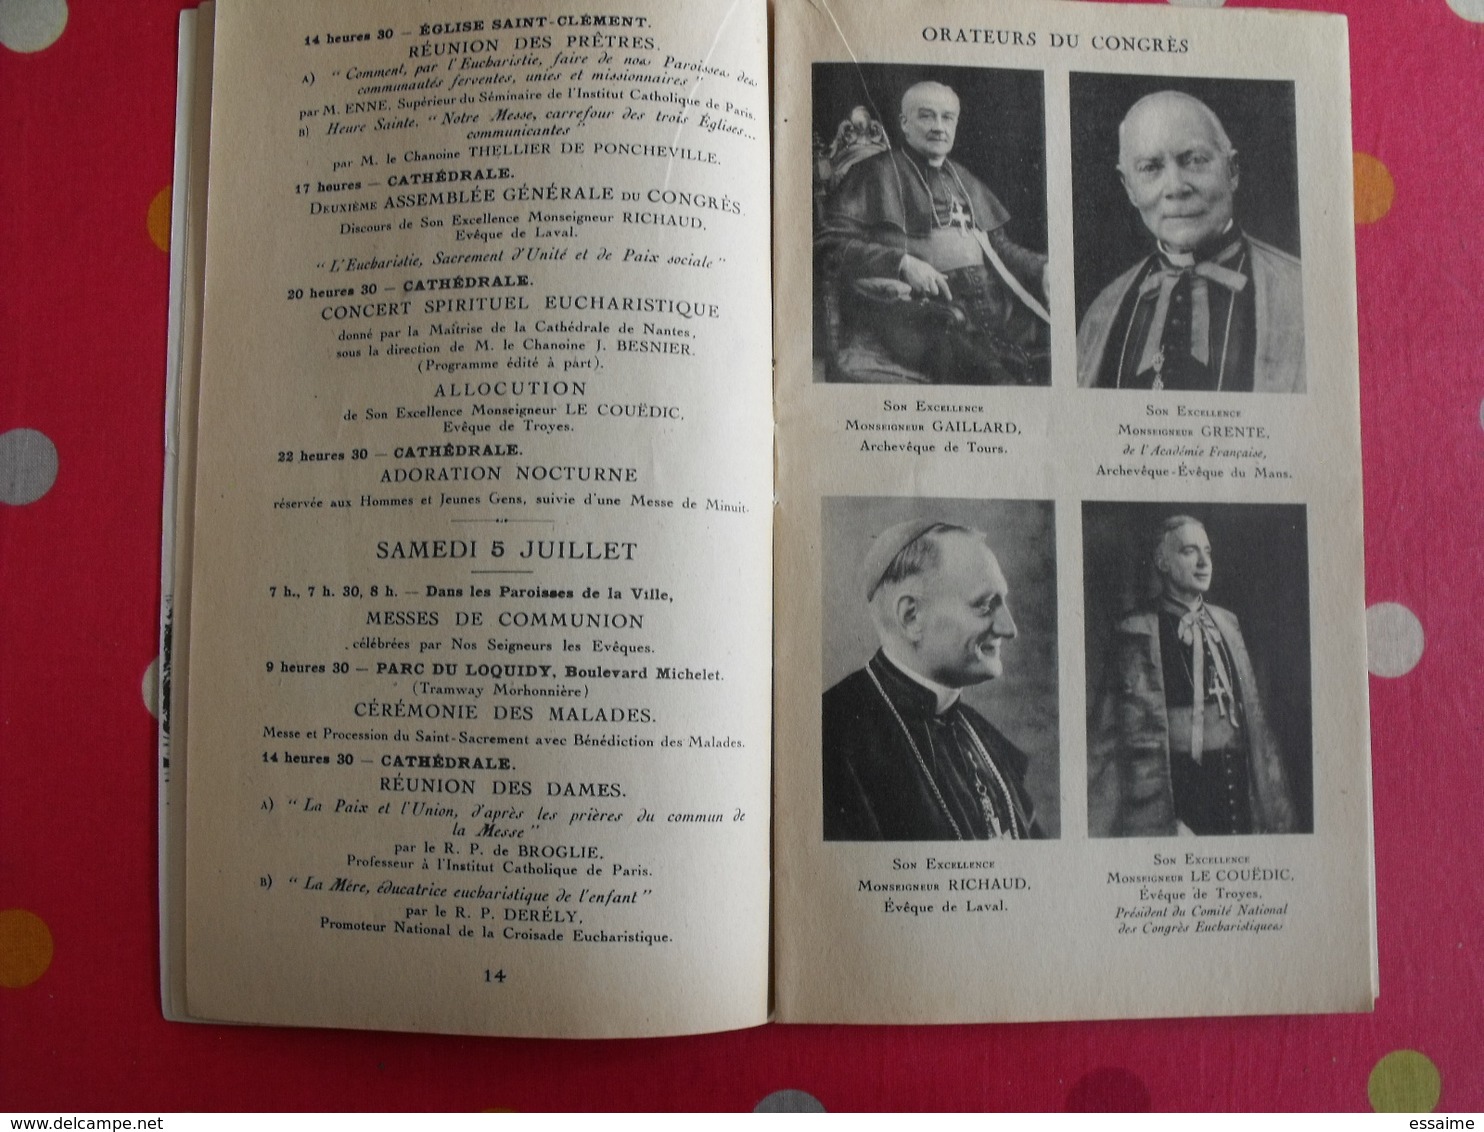 XIII congrès eucharistique national. programme et chants. Nantes 1947